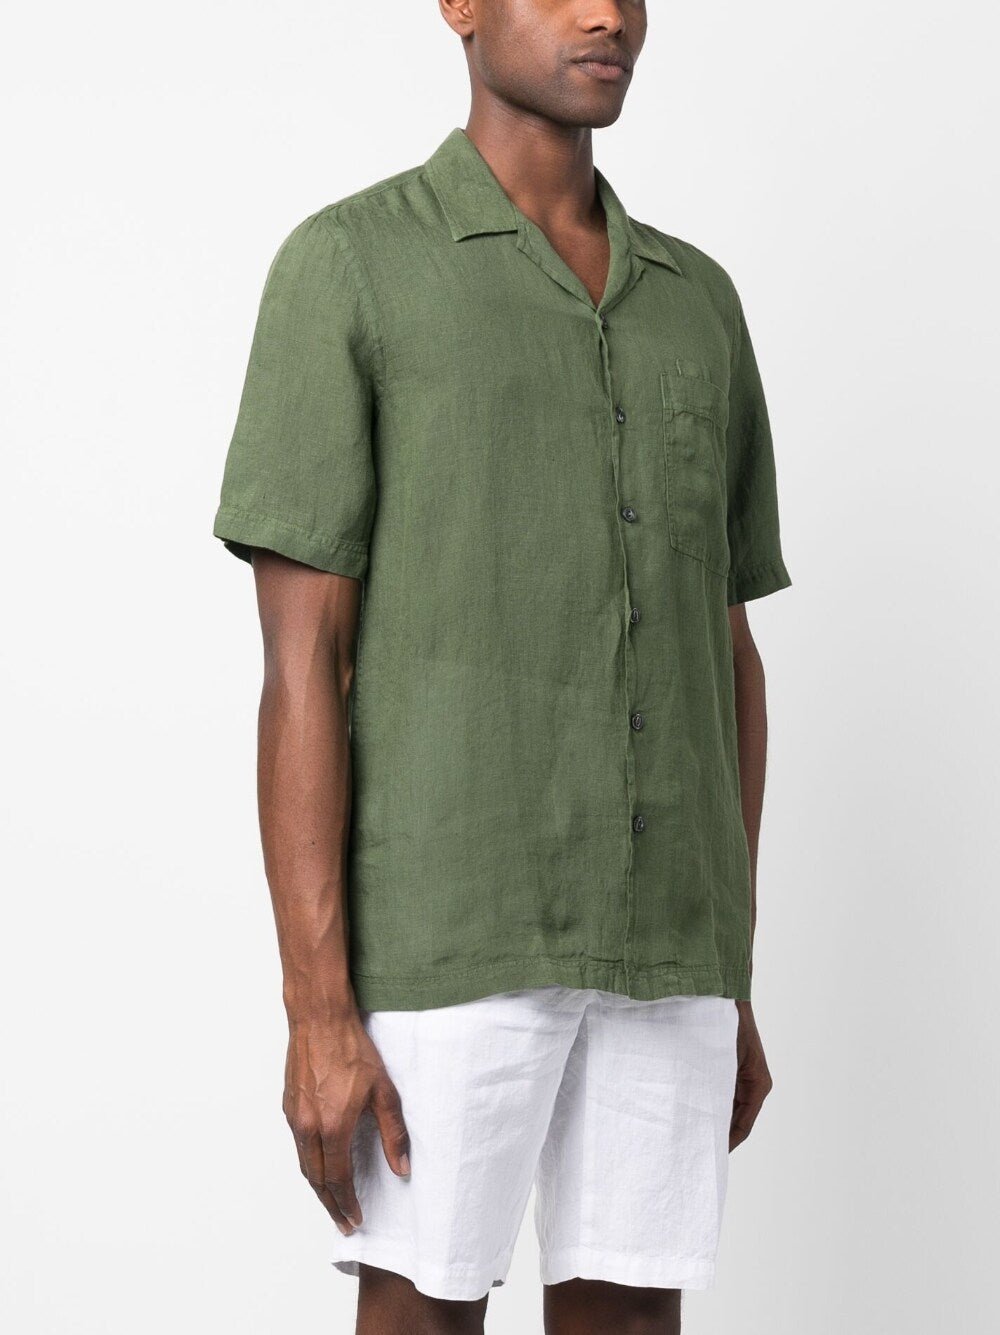 120% LinoShort sleeve shirt at Fashion Clinic